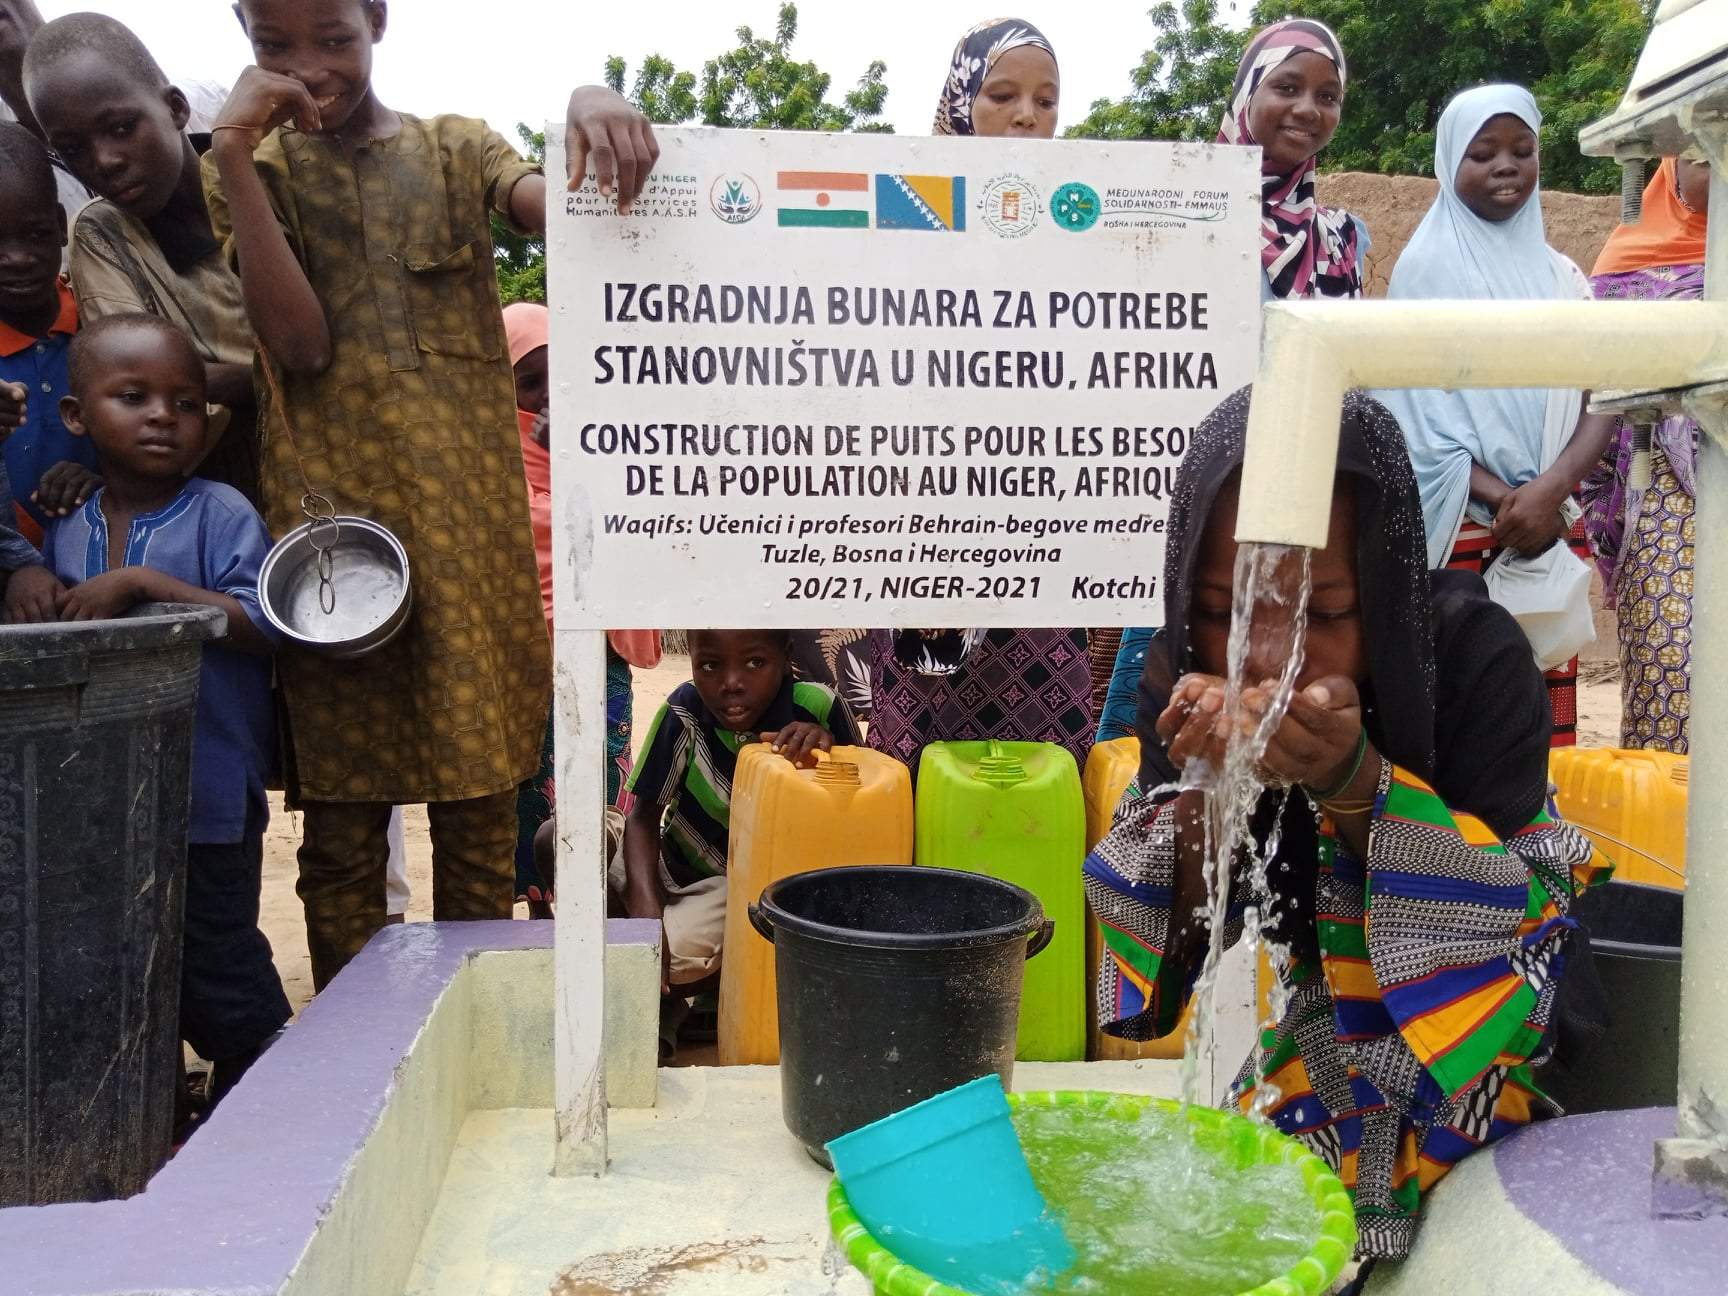 243124069_4177518465690588_8572477017092648087_n (1).jpg - Učenici i profesori Behram-begove medrese finansirali izgradnju bunara u Nigeru (Afrika)